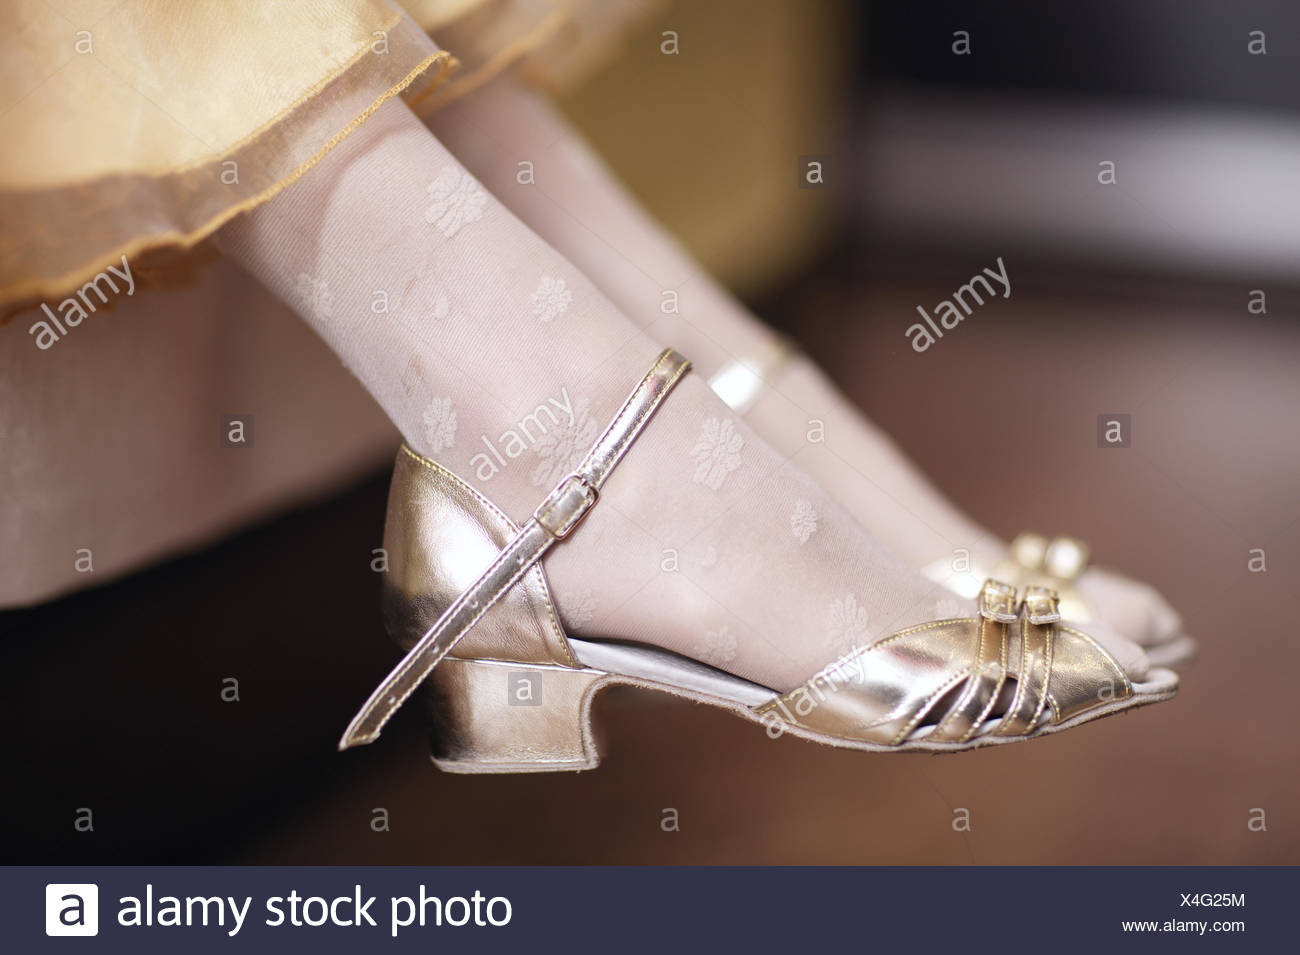 elegant gold sandals